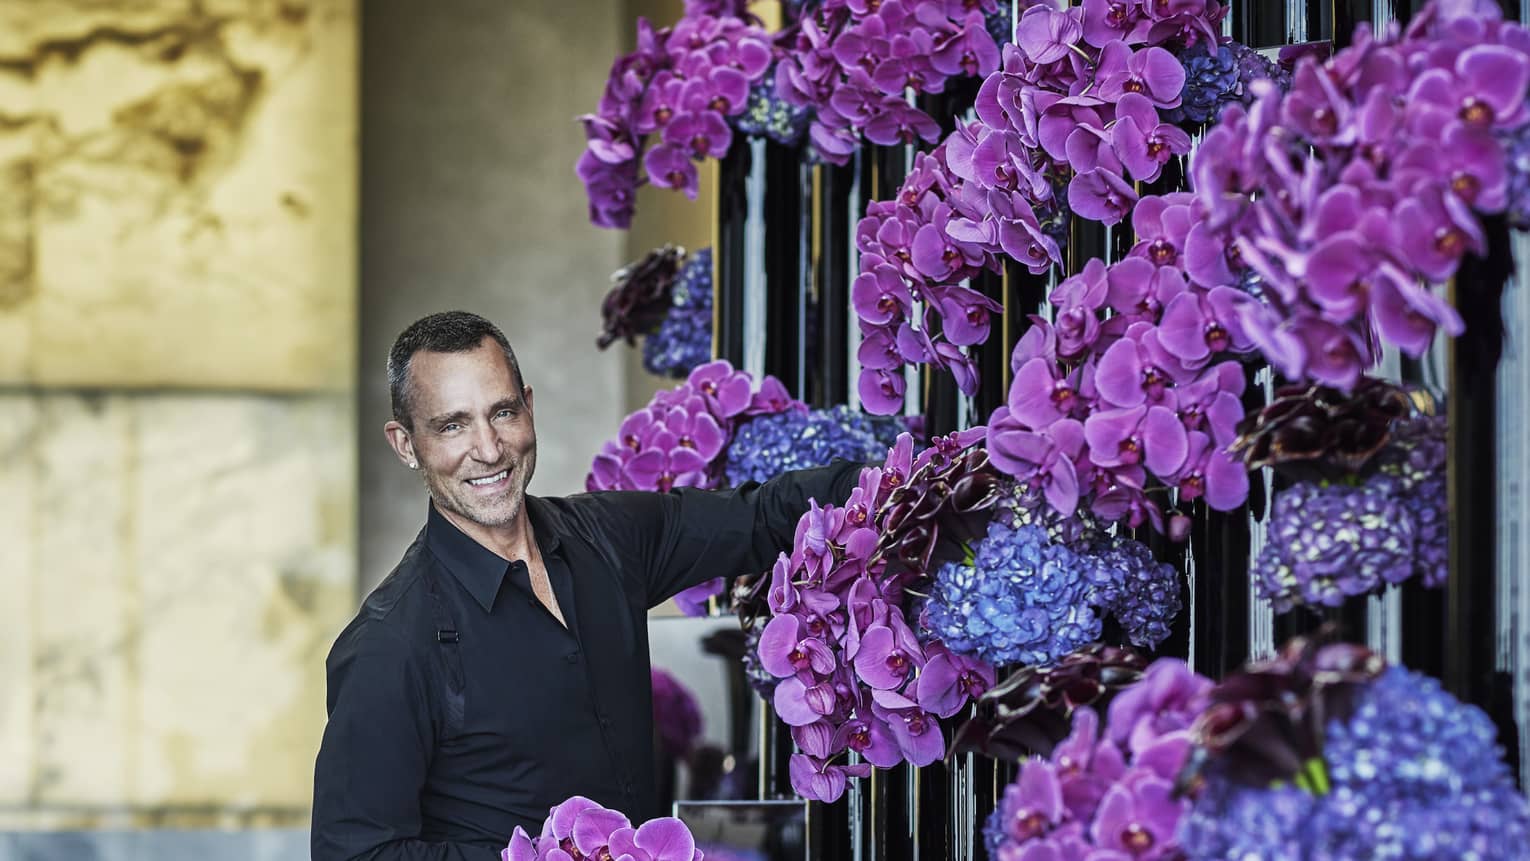 Florist arranges purple and blue flowers in tall black vases